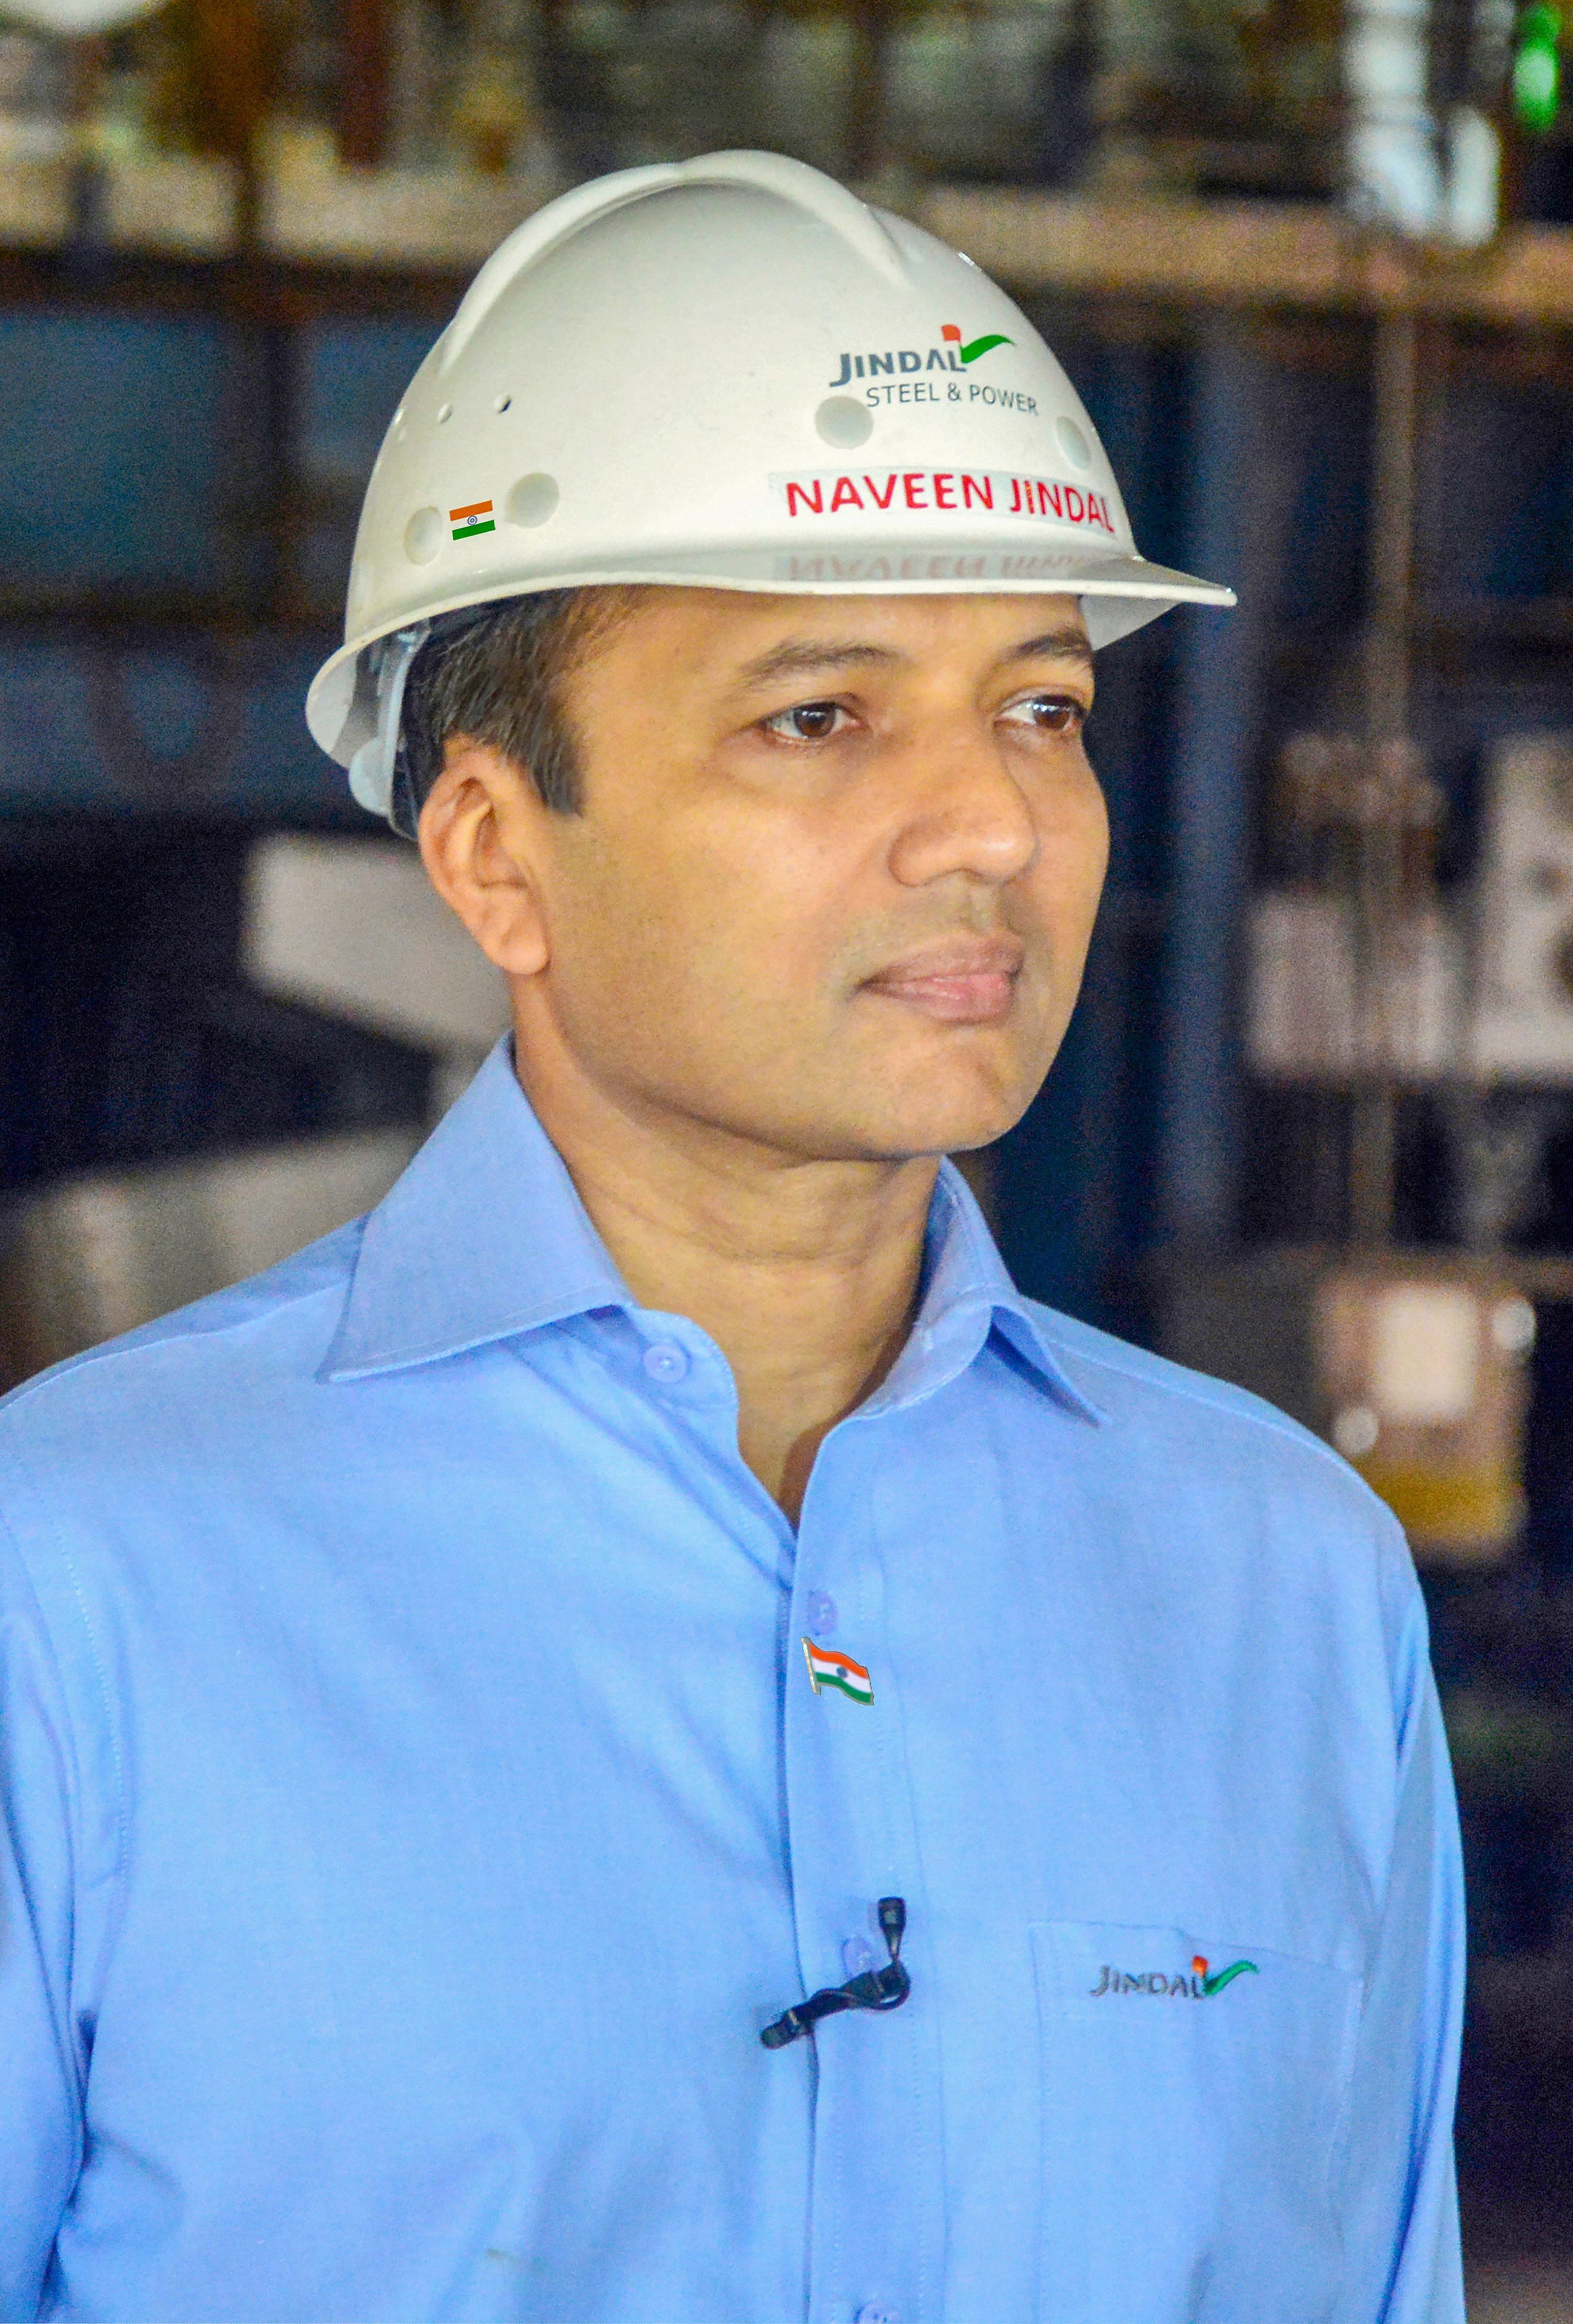 Chairman of Jindal Steel and Power Ltd (JSPL) Naveen Jindal. (Credit: PTI)